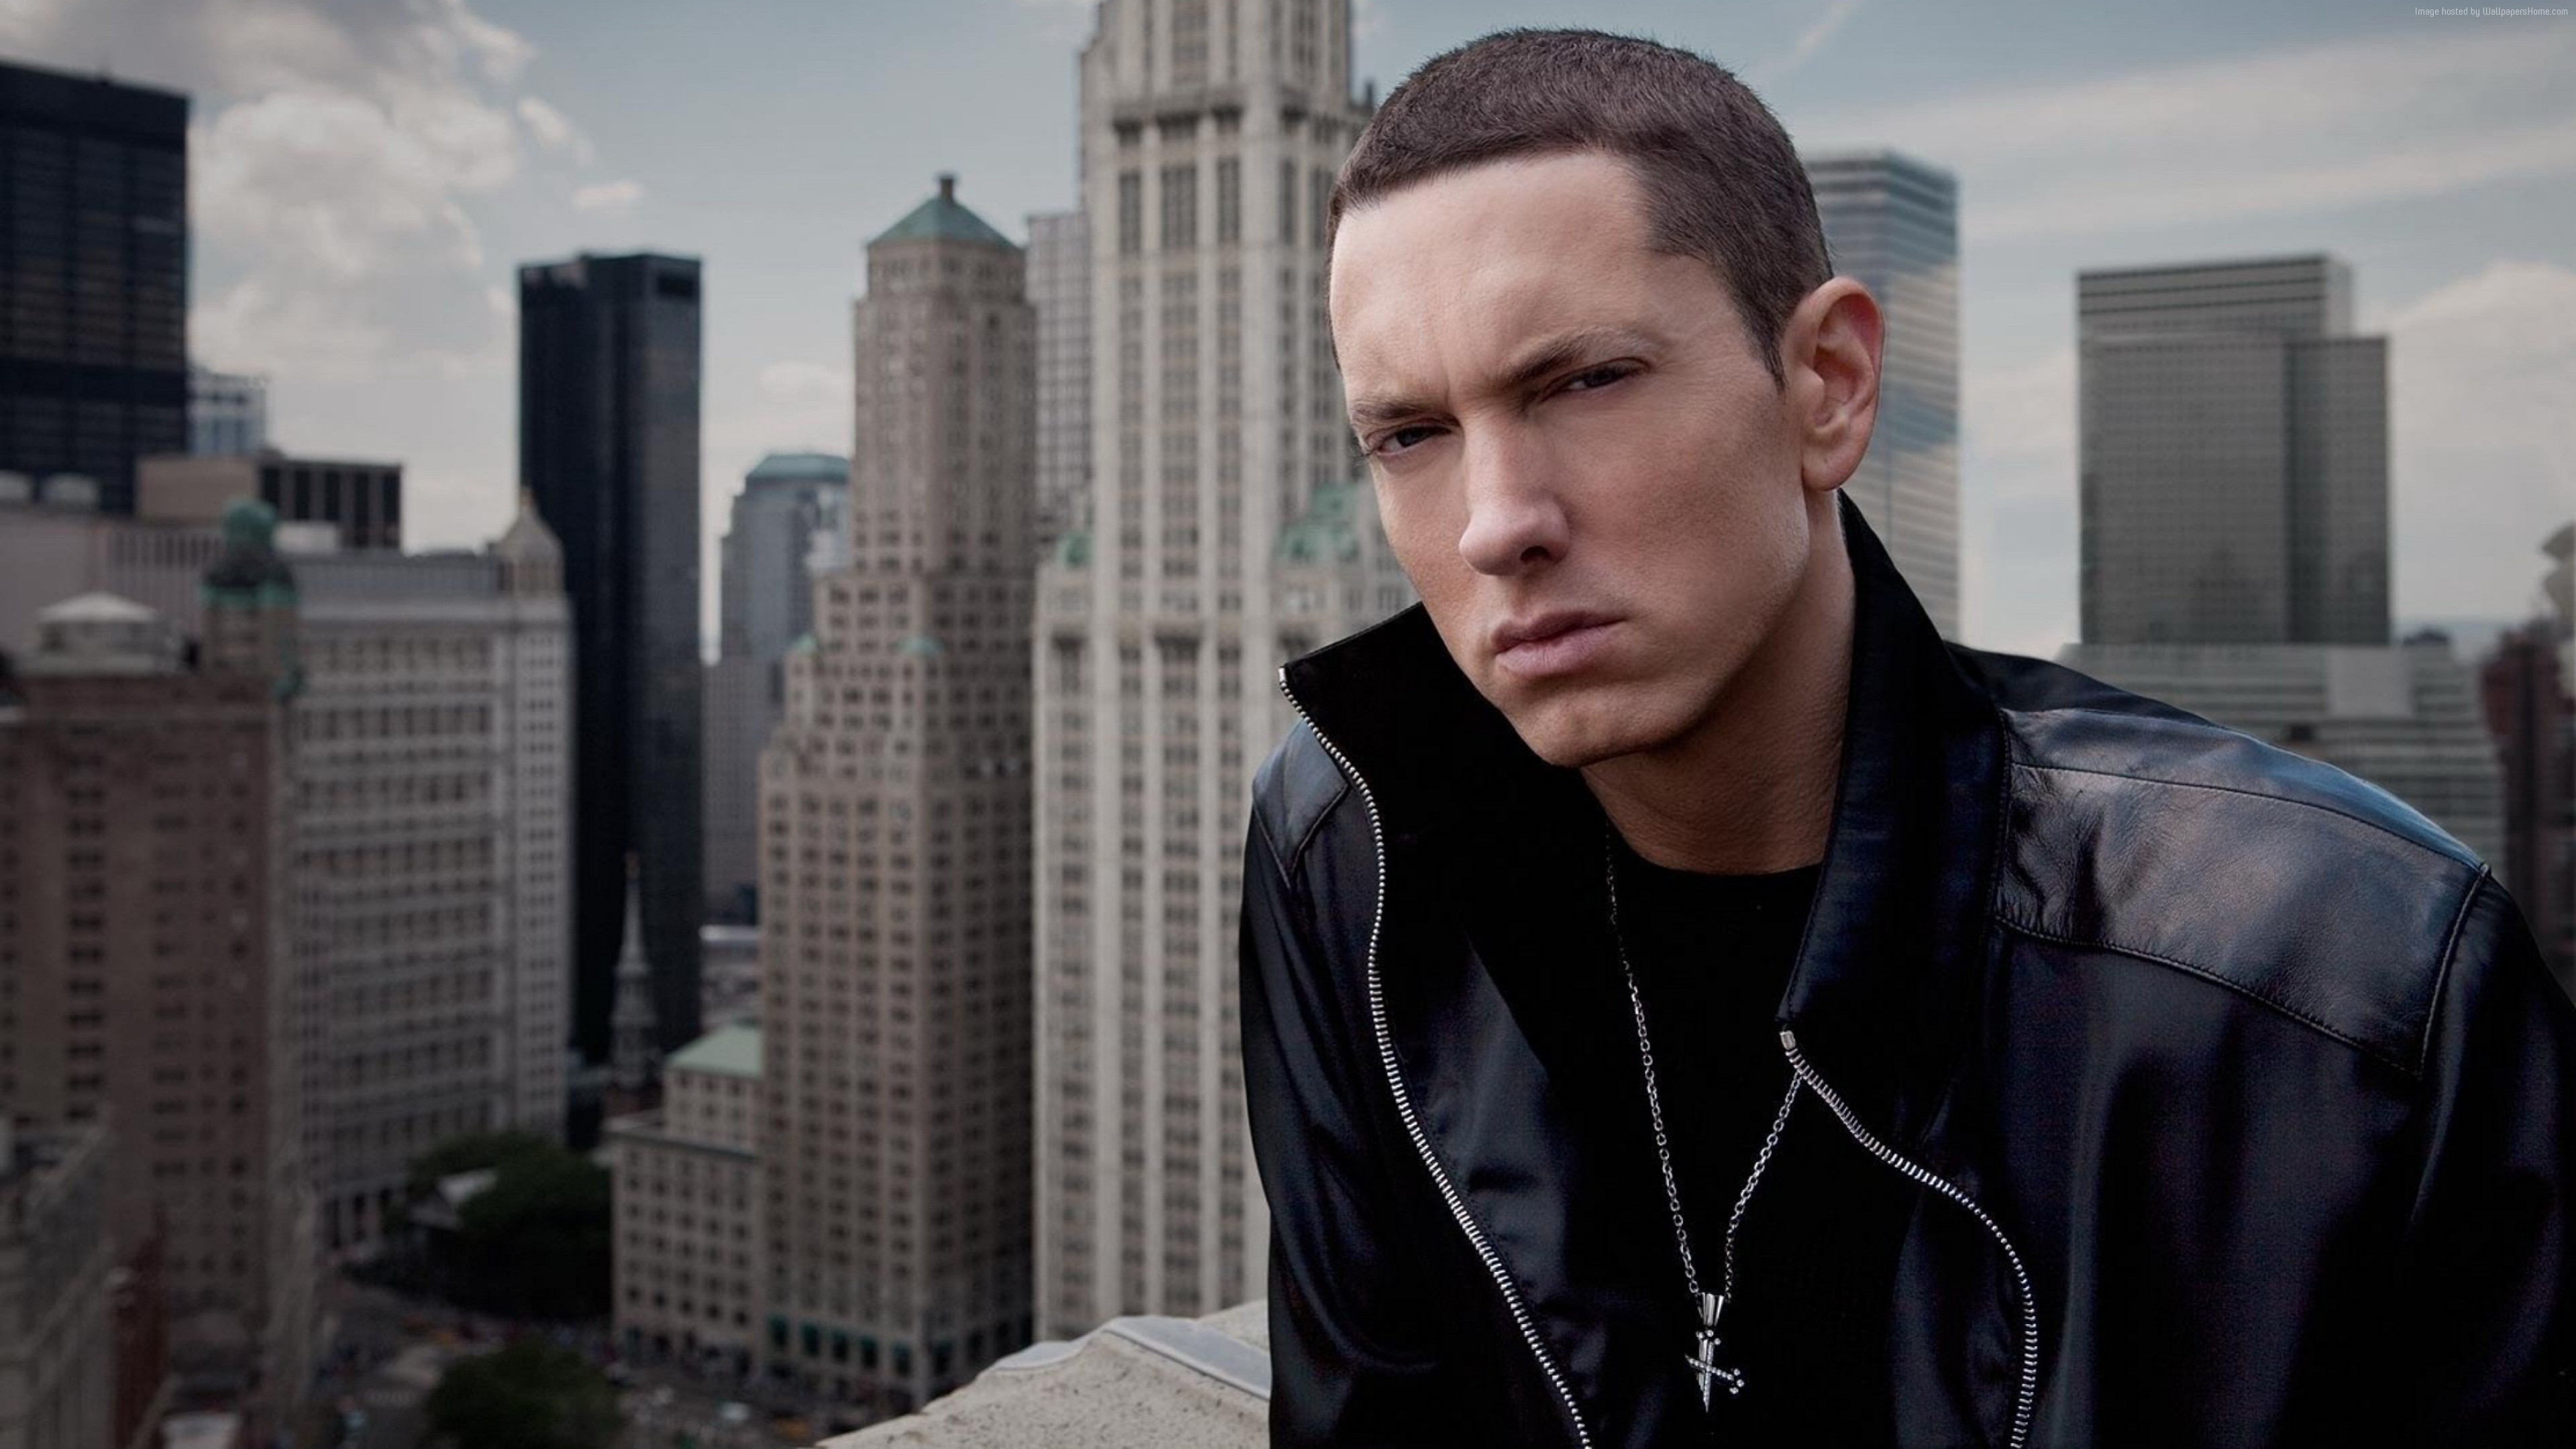 Wallpaper Eminem, singer, rapper, actor, 4K, Celebrities